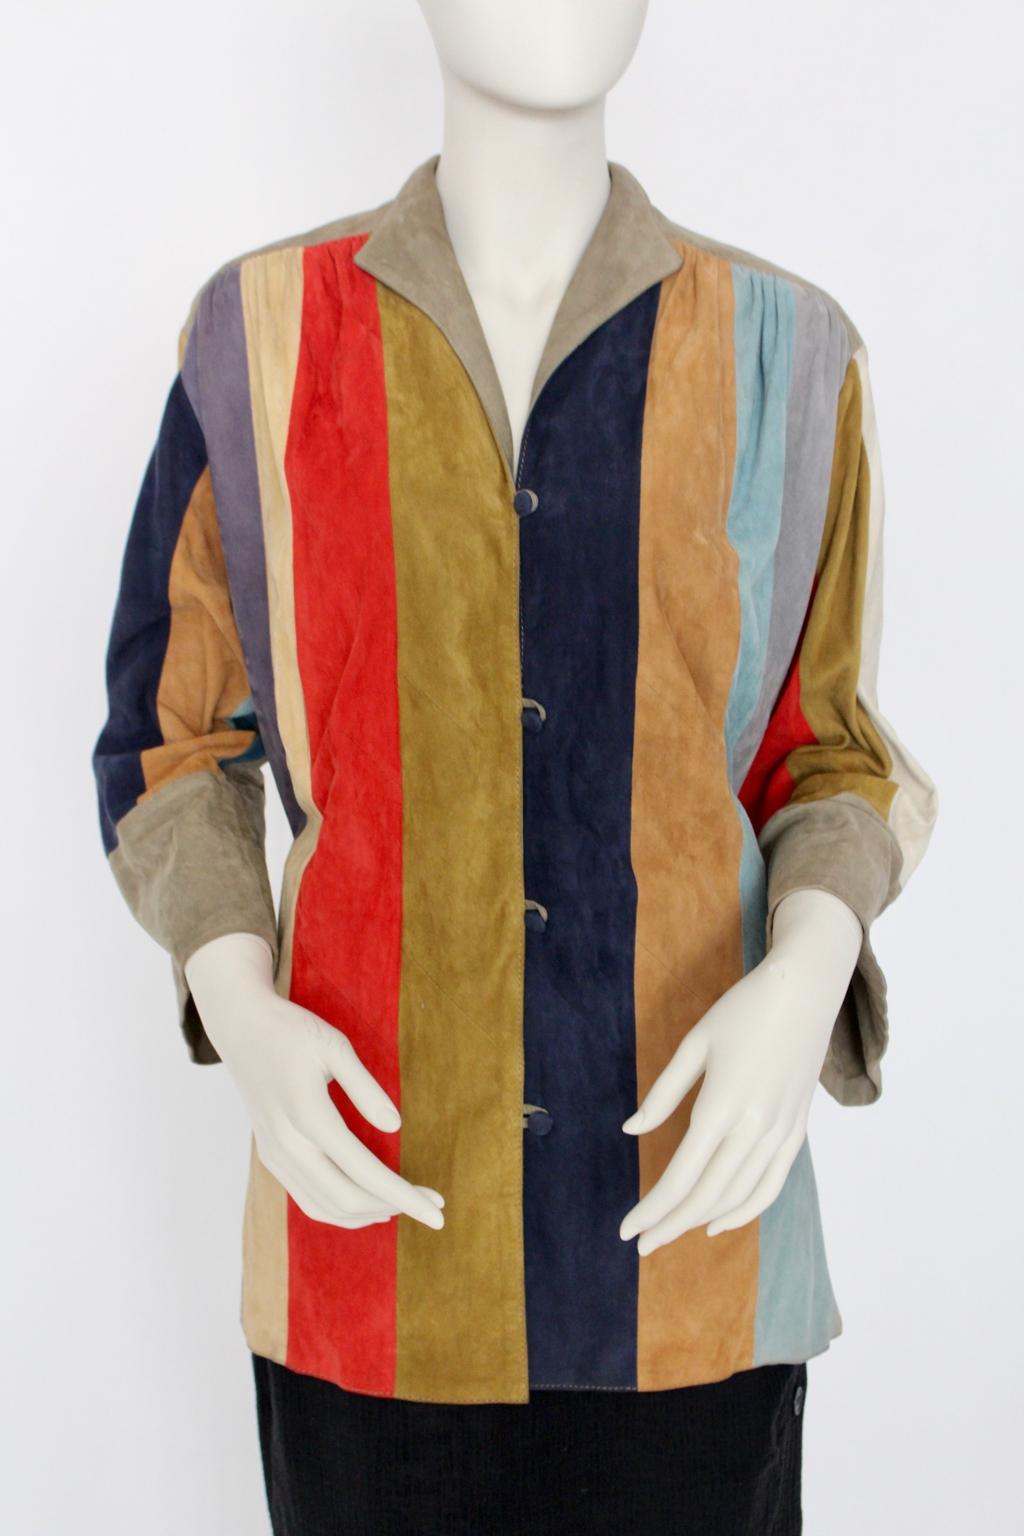 Multicolored Suede Vintage Leather Jacket, France 1970s 11